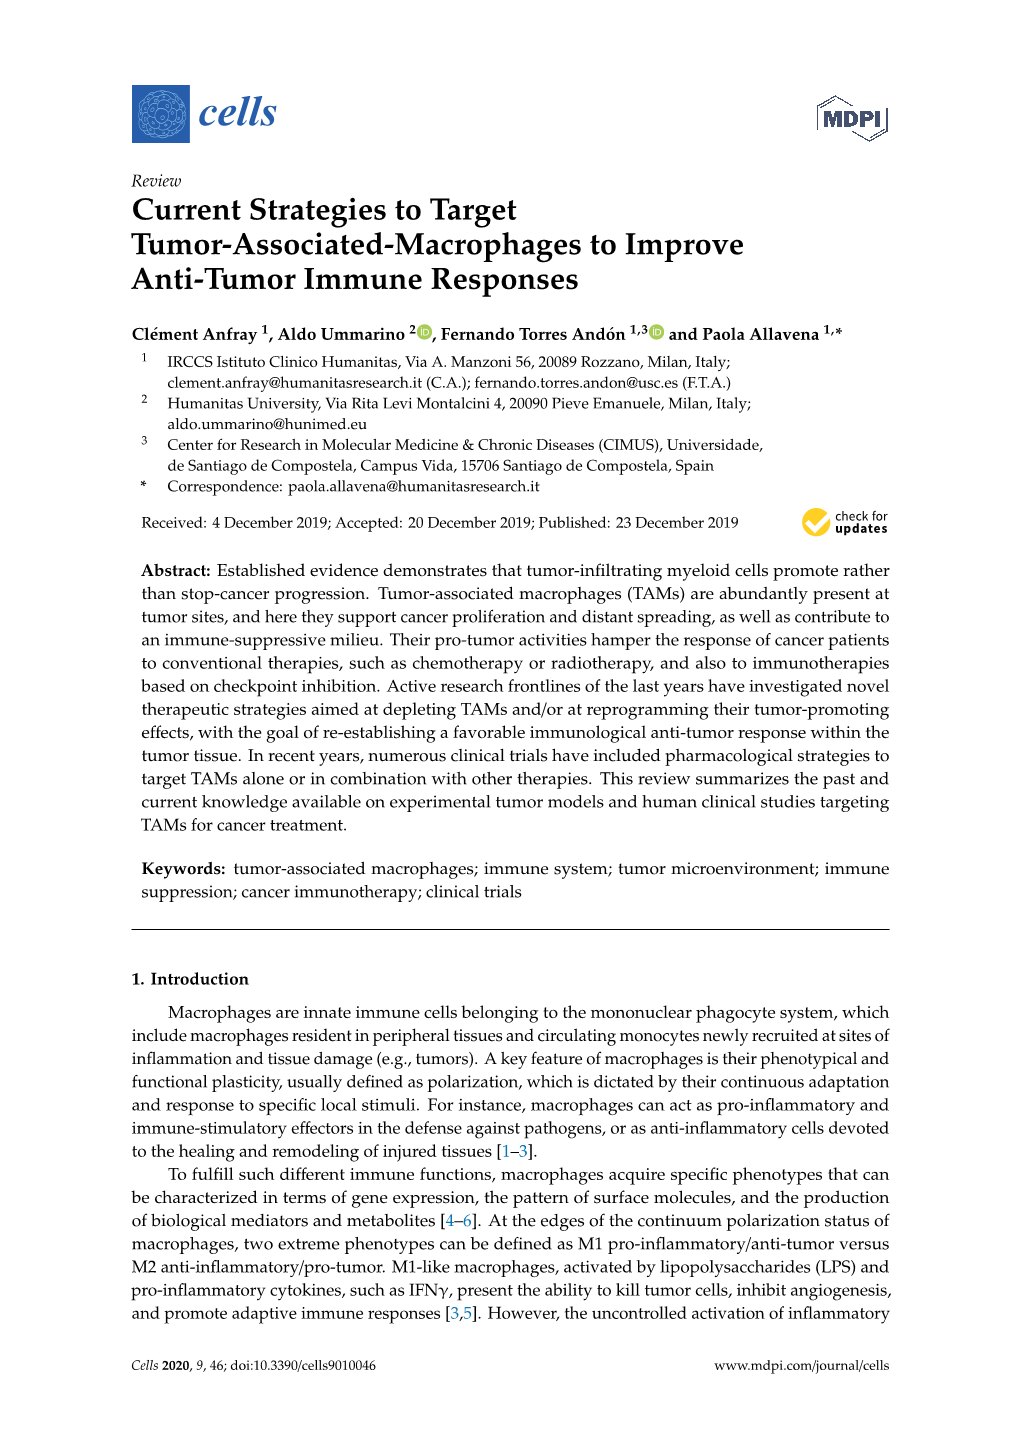 Current Strategies to Target Tumor-Associated-Macrophages to Improve Anti-Tumor Immune Responses